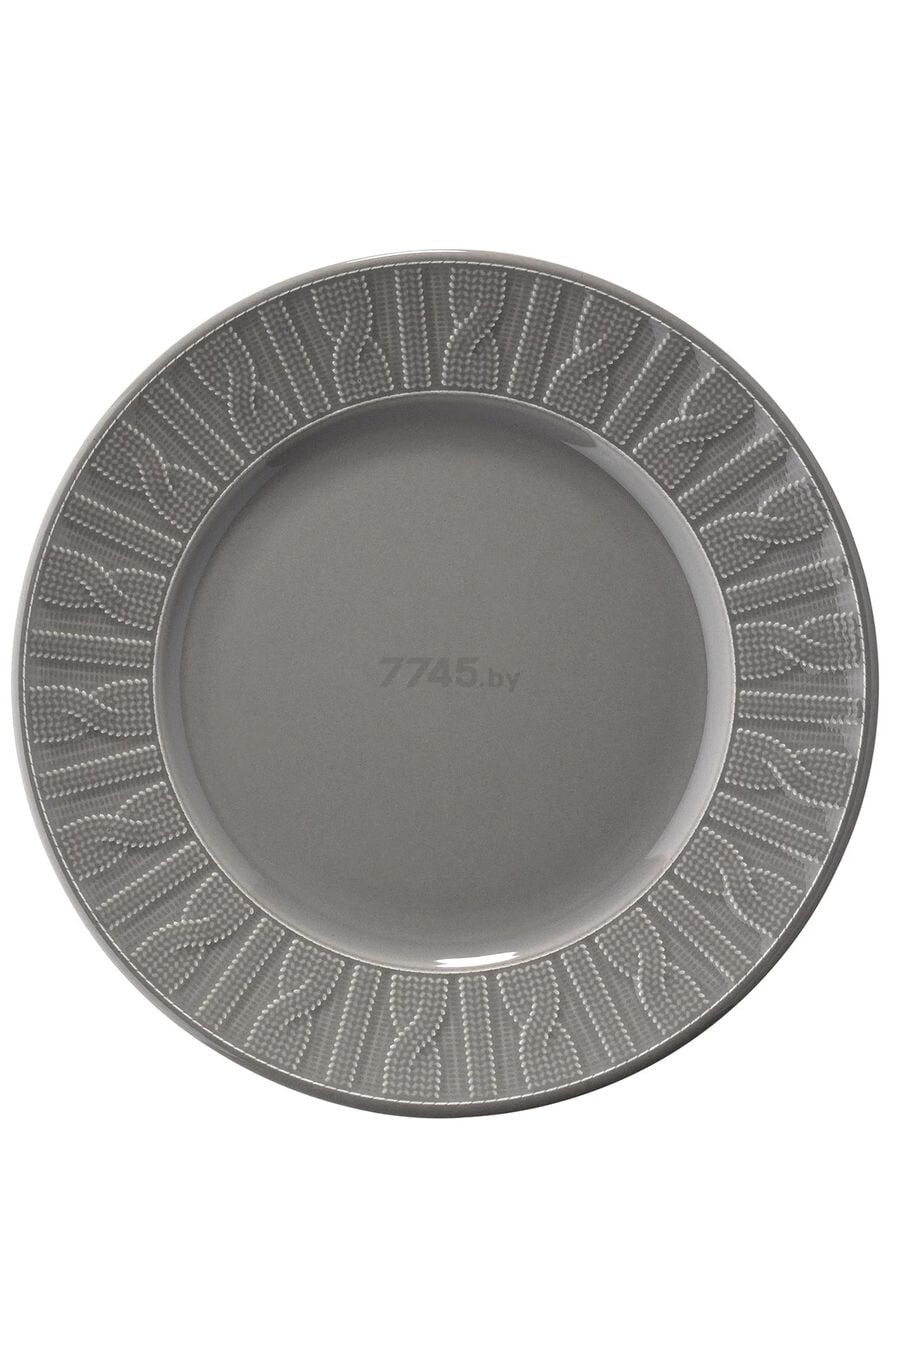 Набор посуды KUTAHYA Selanik 24 предмета серый (8697828864710) - Фото 2